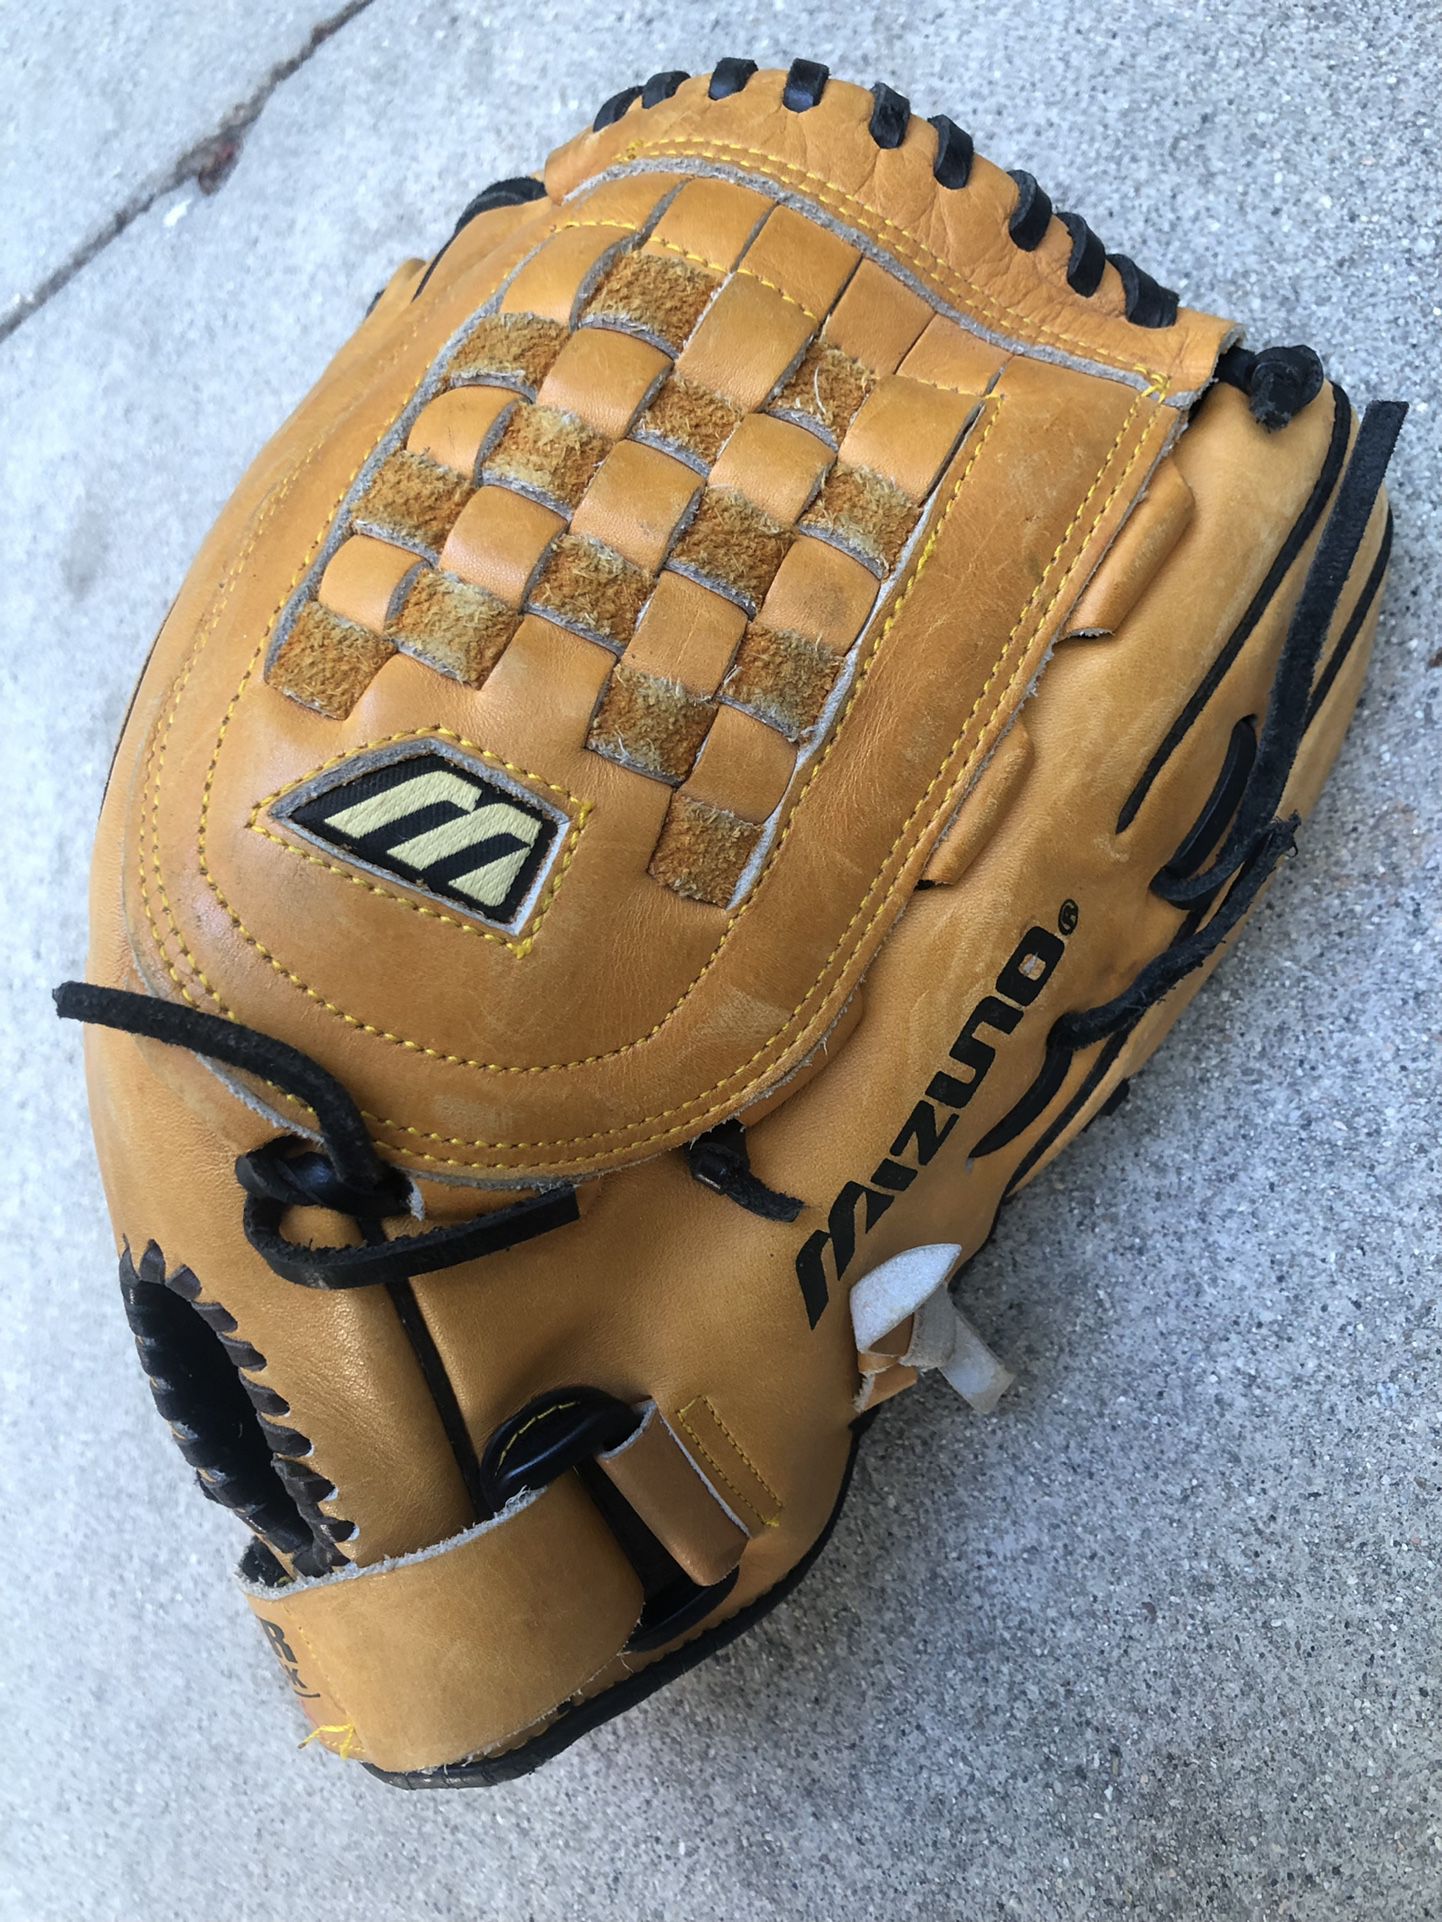 Mizuno Baseball Softball Glove 13” I  Excellent Condition Have More Equipment 